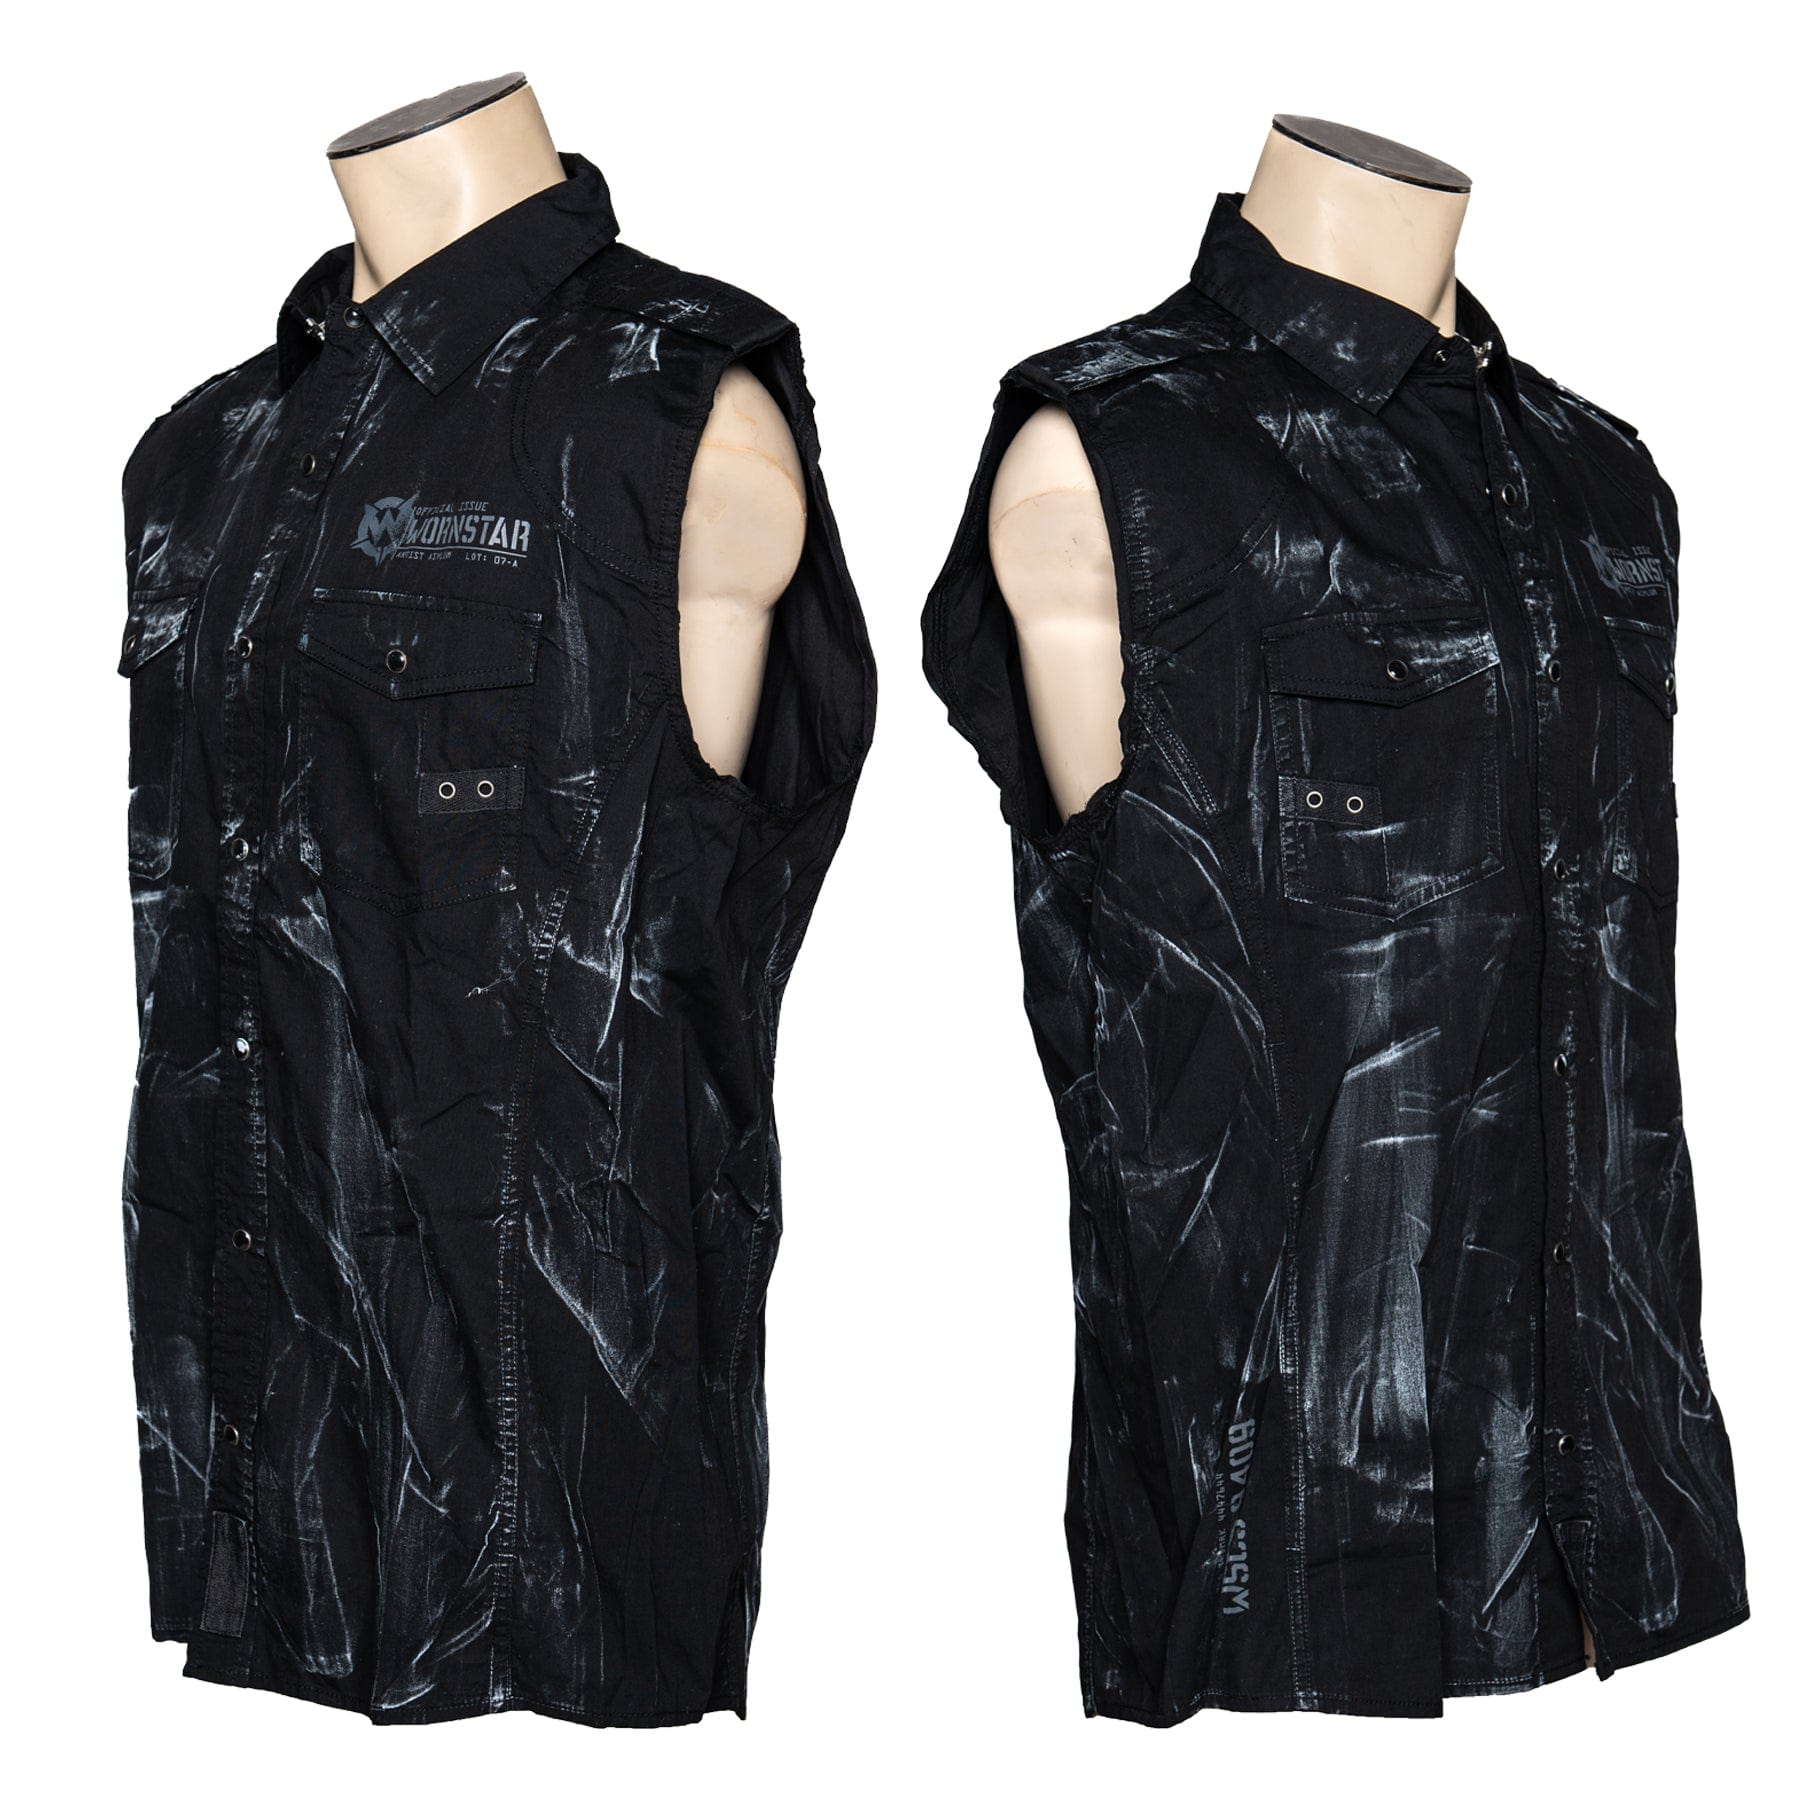 Custom Chop Shop Work Shirt Wornstar Customized Sleeveless Shirt - Shadow Works - Ready to ship - Size XL